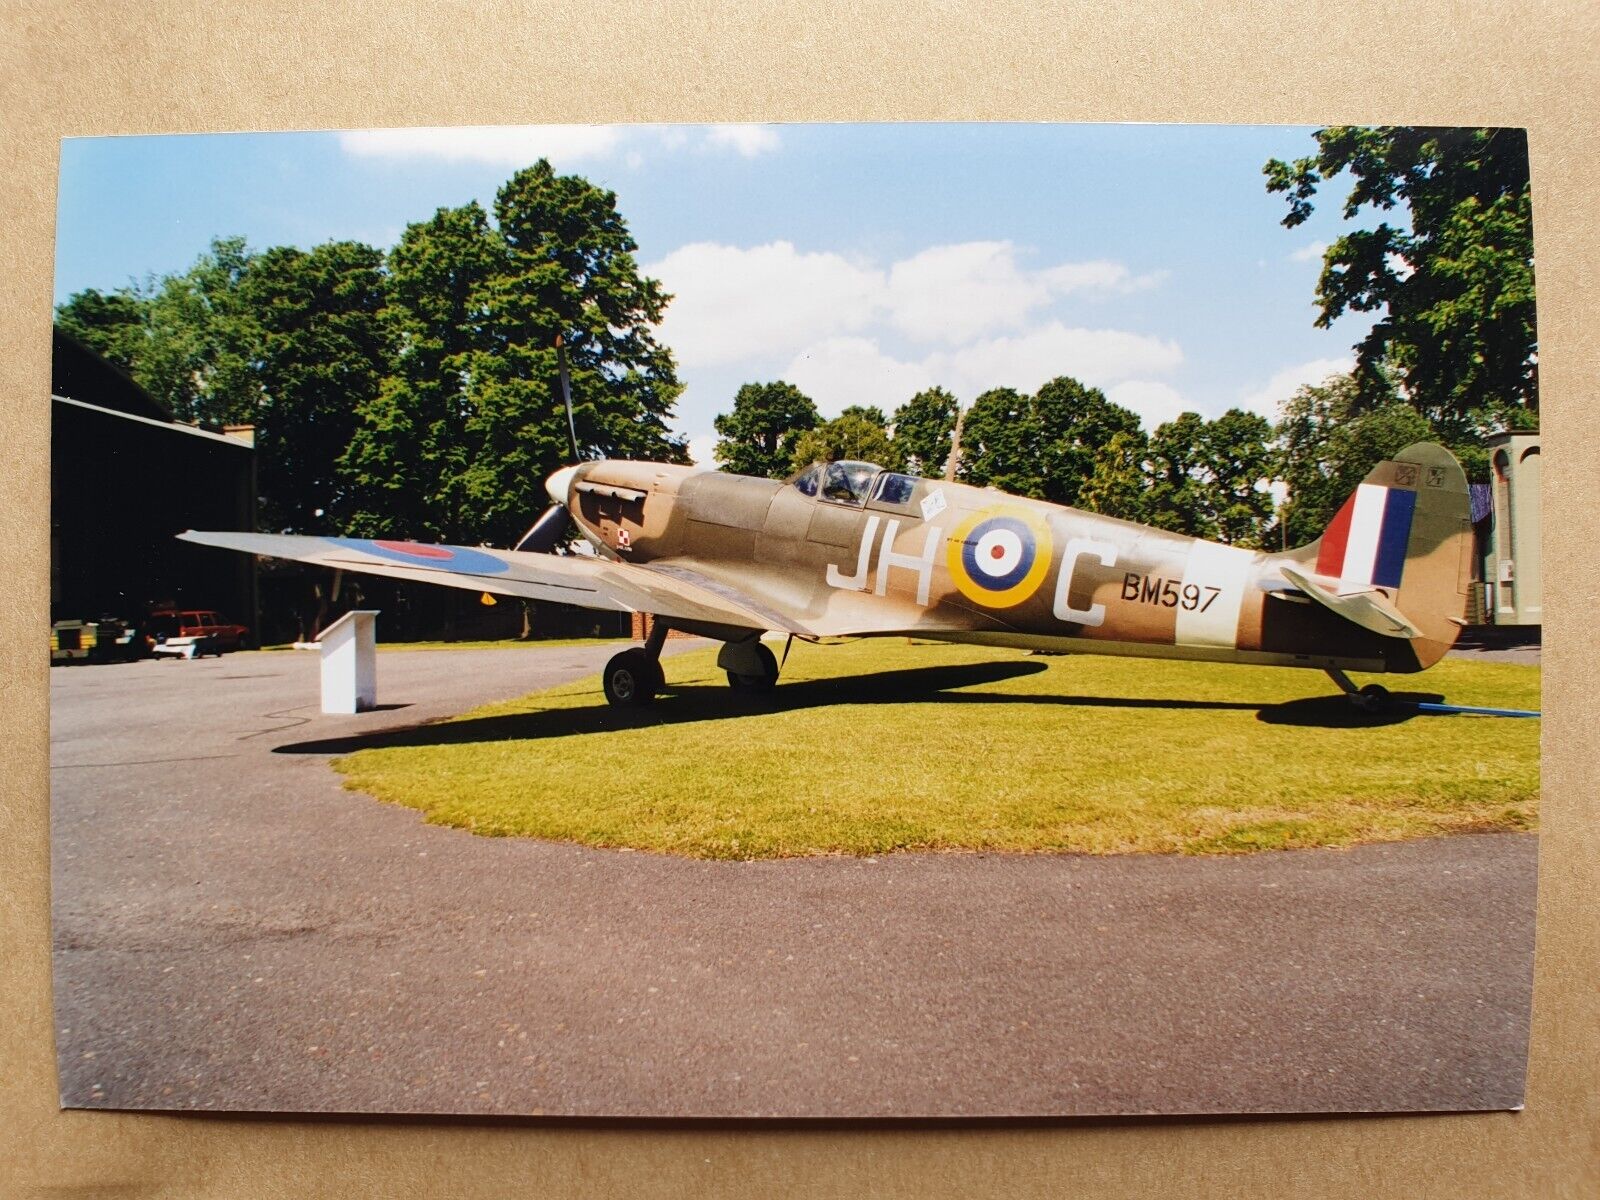 Royal Air Force Spitfire BM597 Photograph